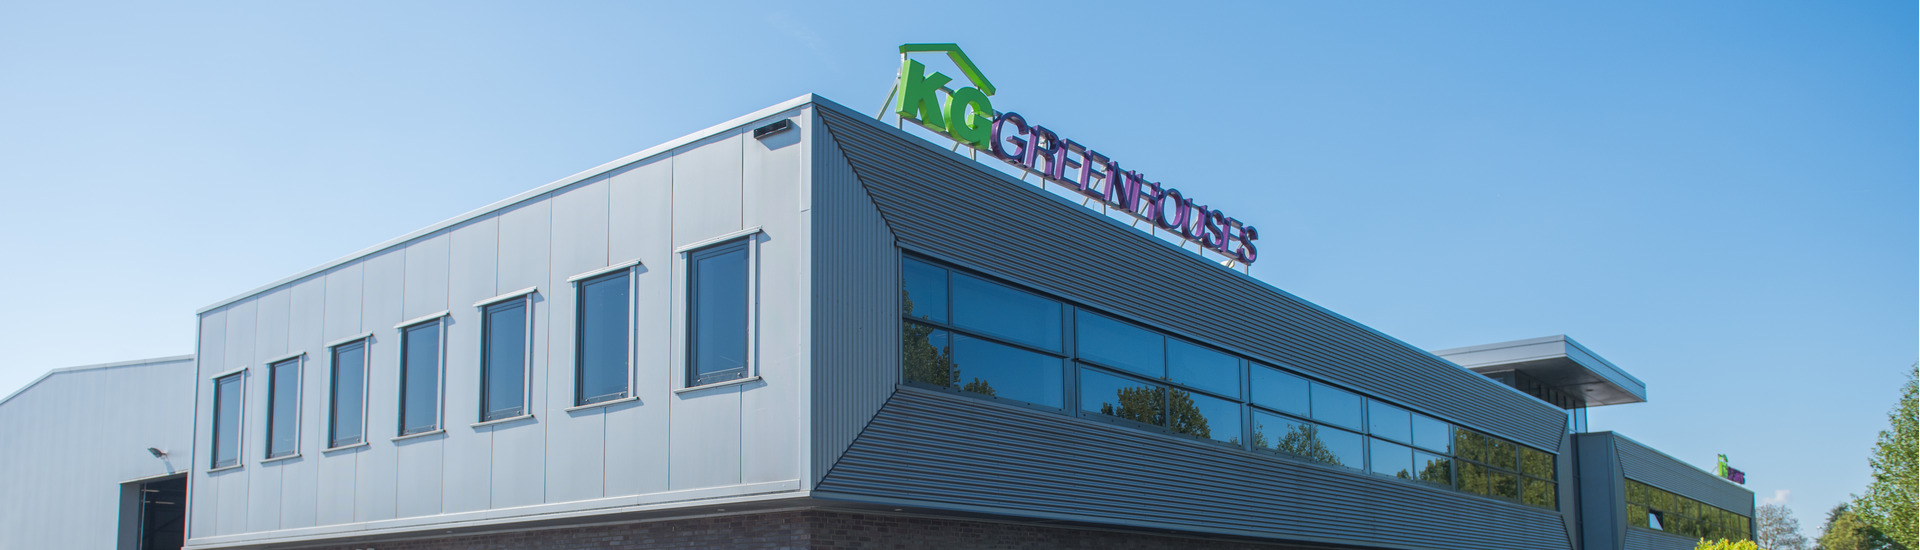 KG Greenhouses